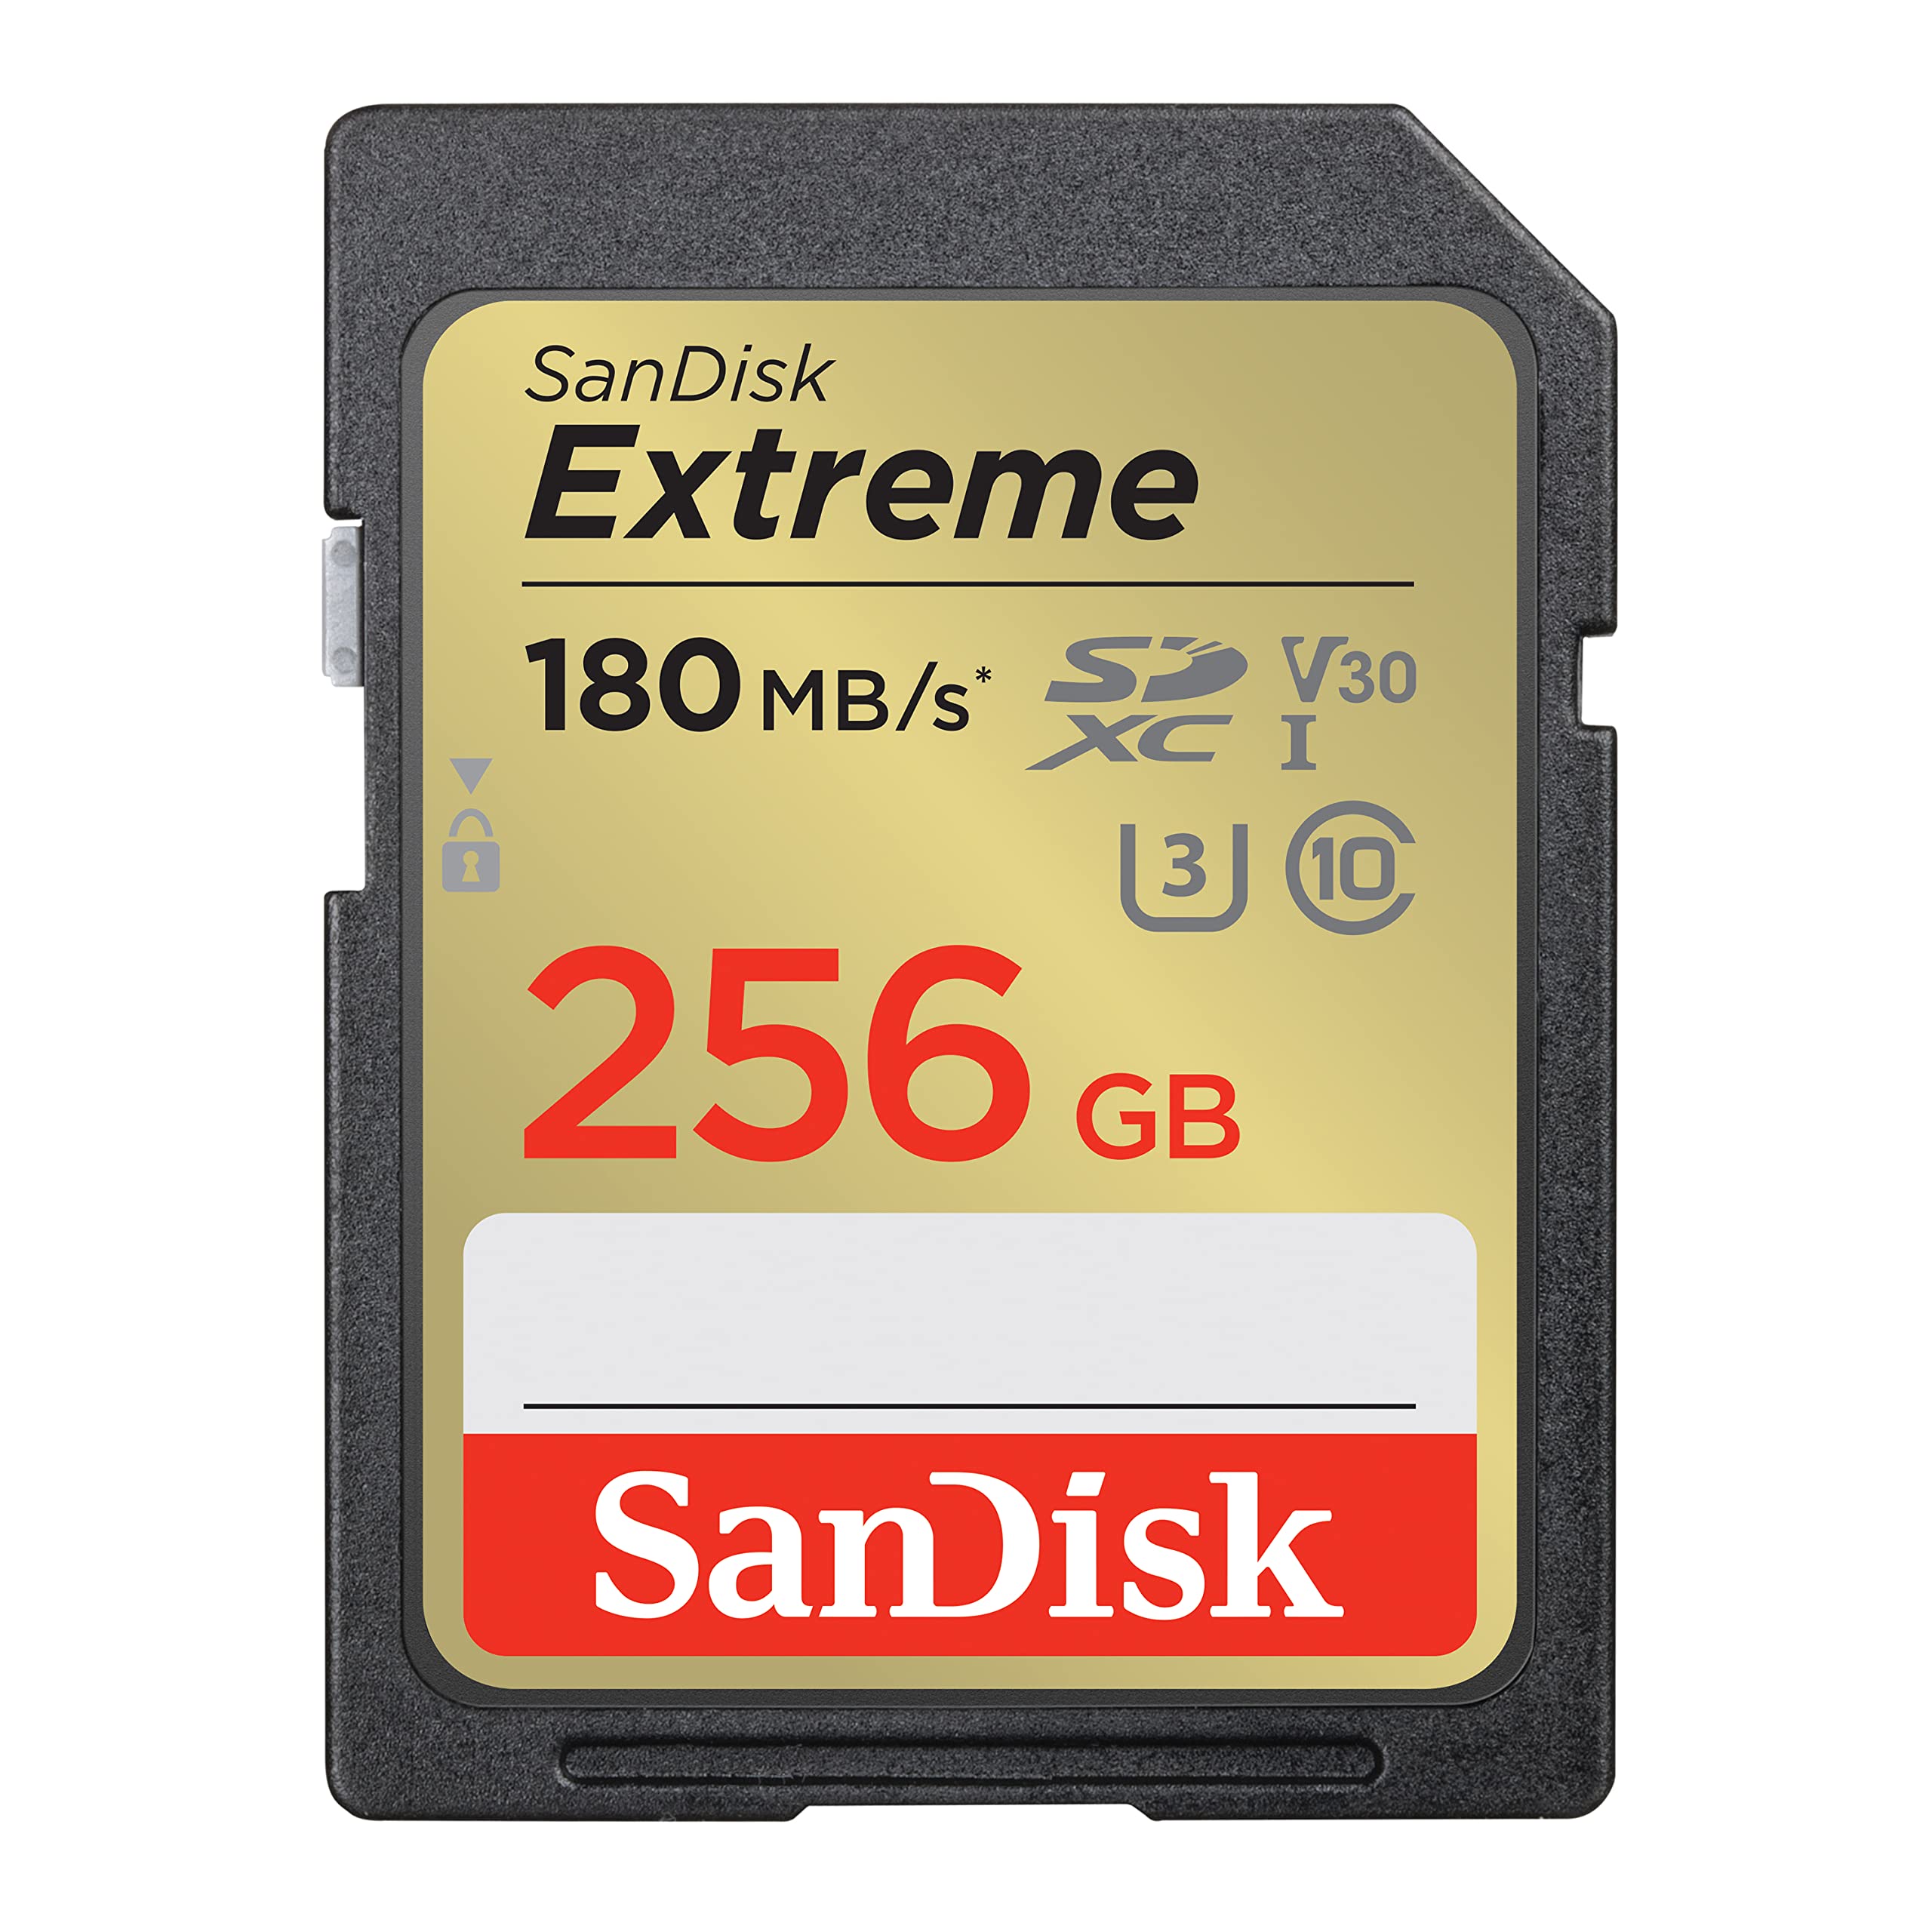 SanDisk 256GB Extreme SDXC UHS-I Memory Card - C10, U3, V30, 4K, UHD, SD Card - SDSDXVV-256G-GNCIN $28.99